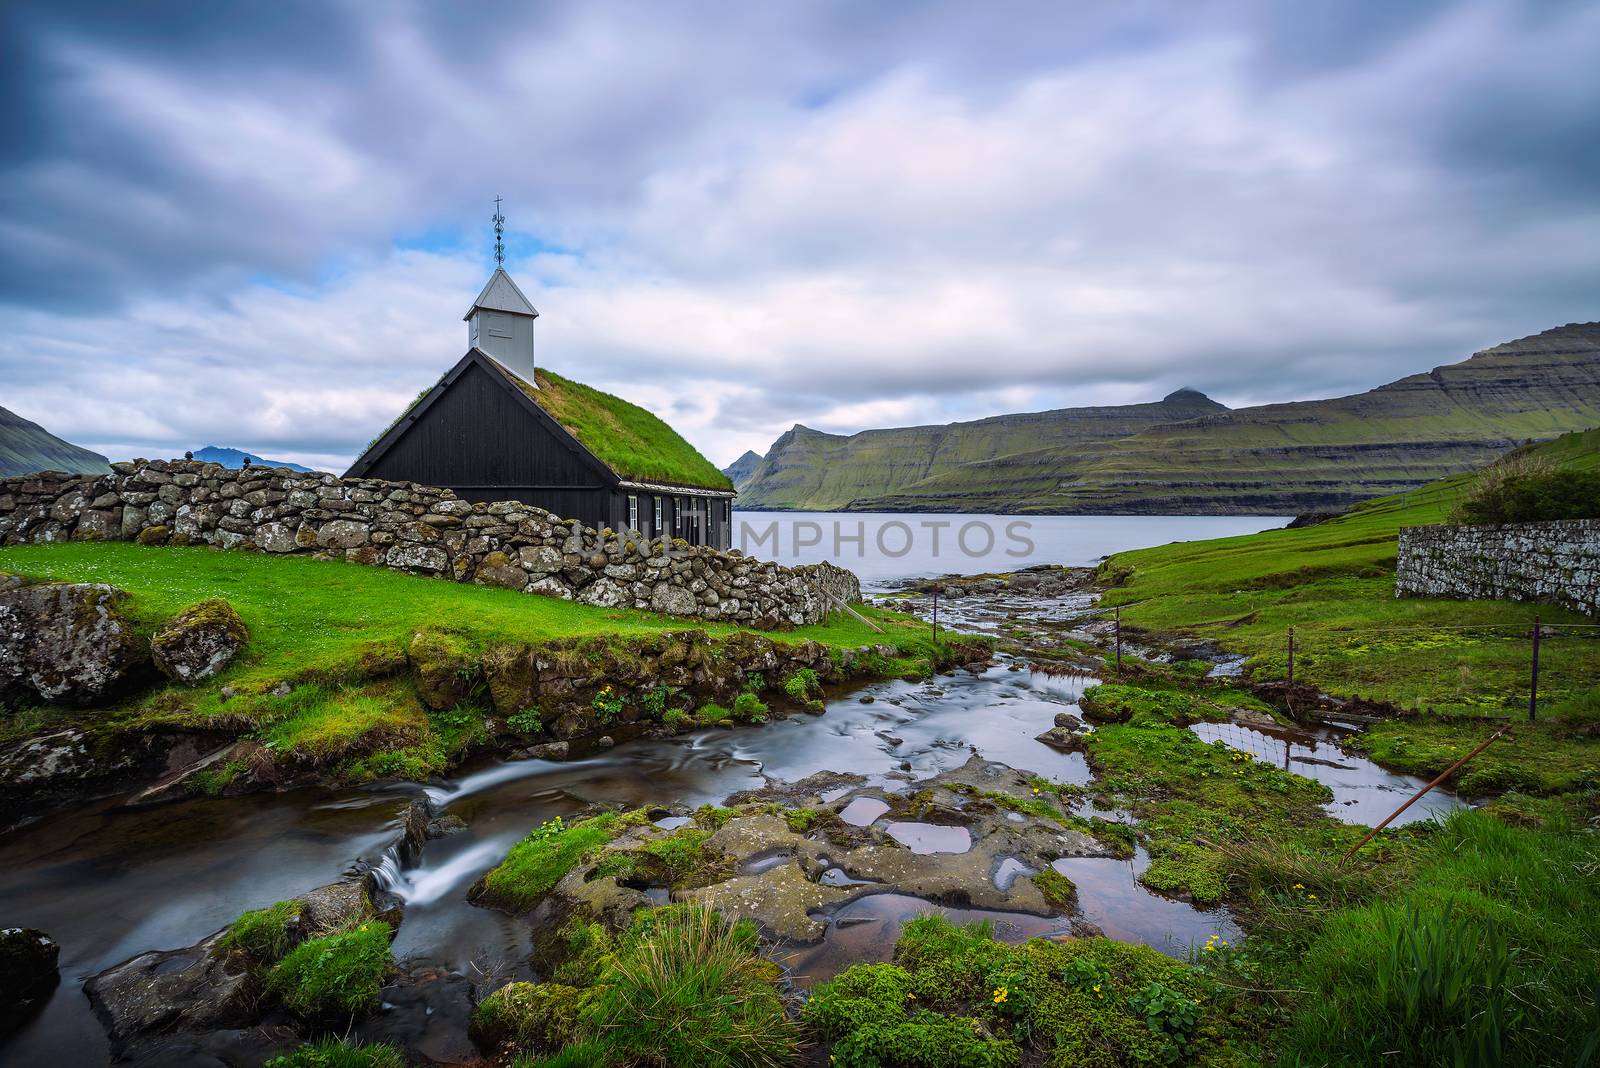 Small wooden village church on the sea shore in Faroe Islands, Denmark by nickfox